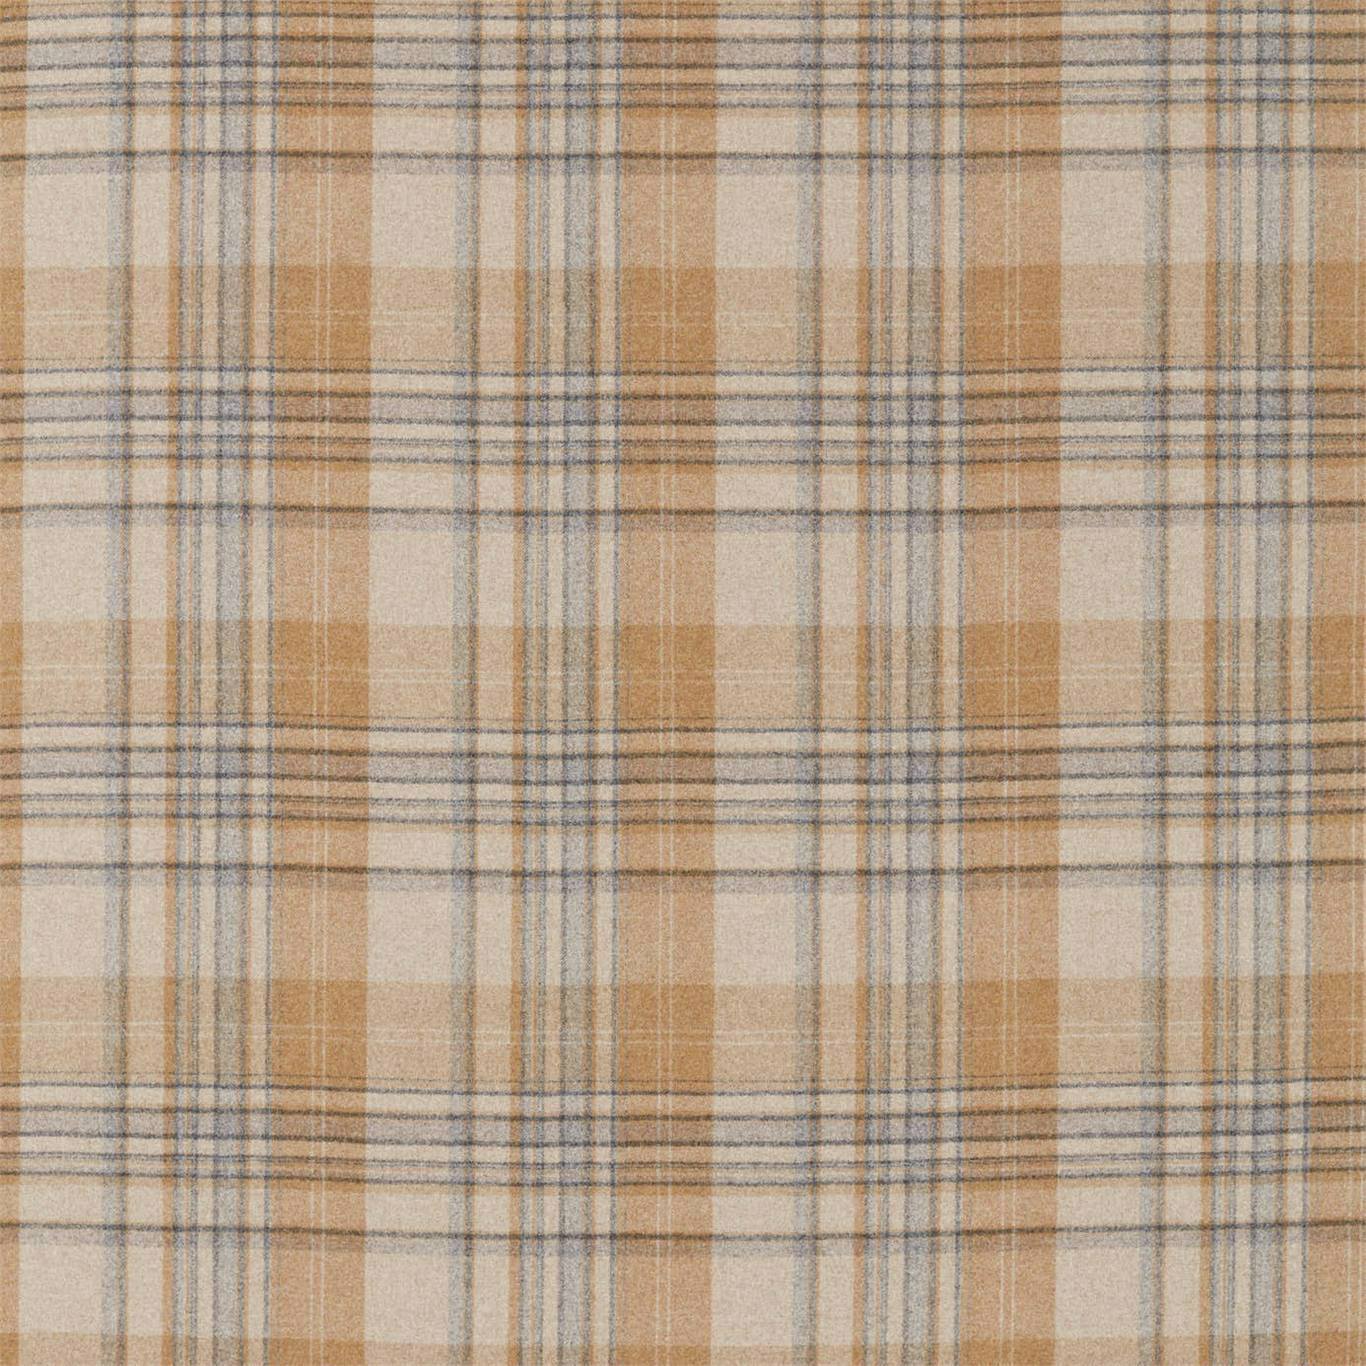 Bryndle Check Fabric by Sanderson - DISW236737 - Honey/Grey